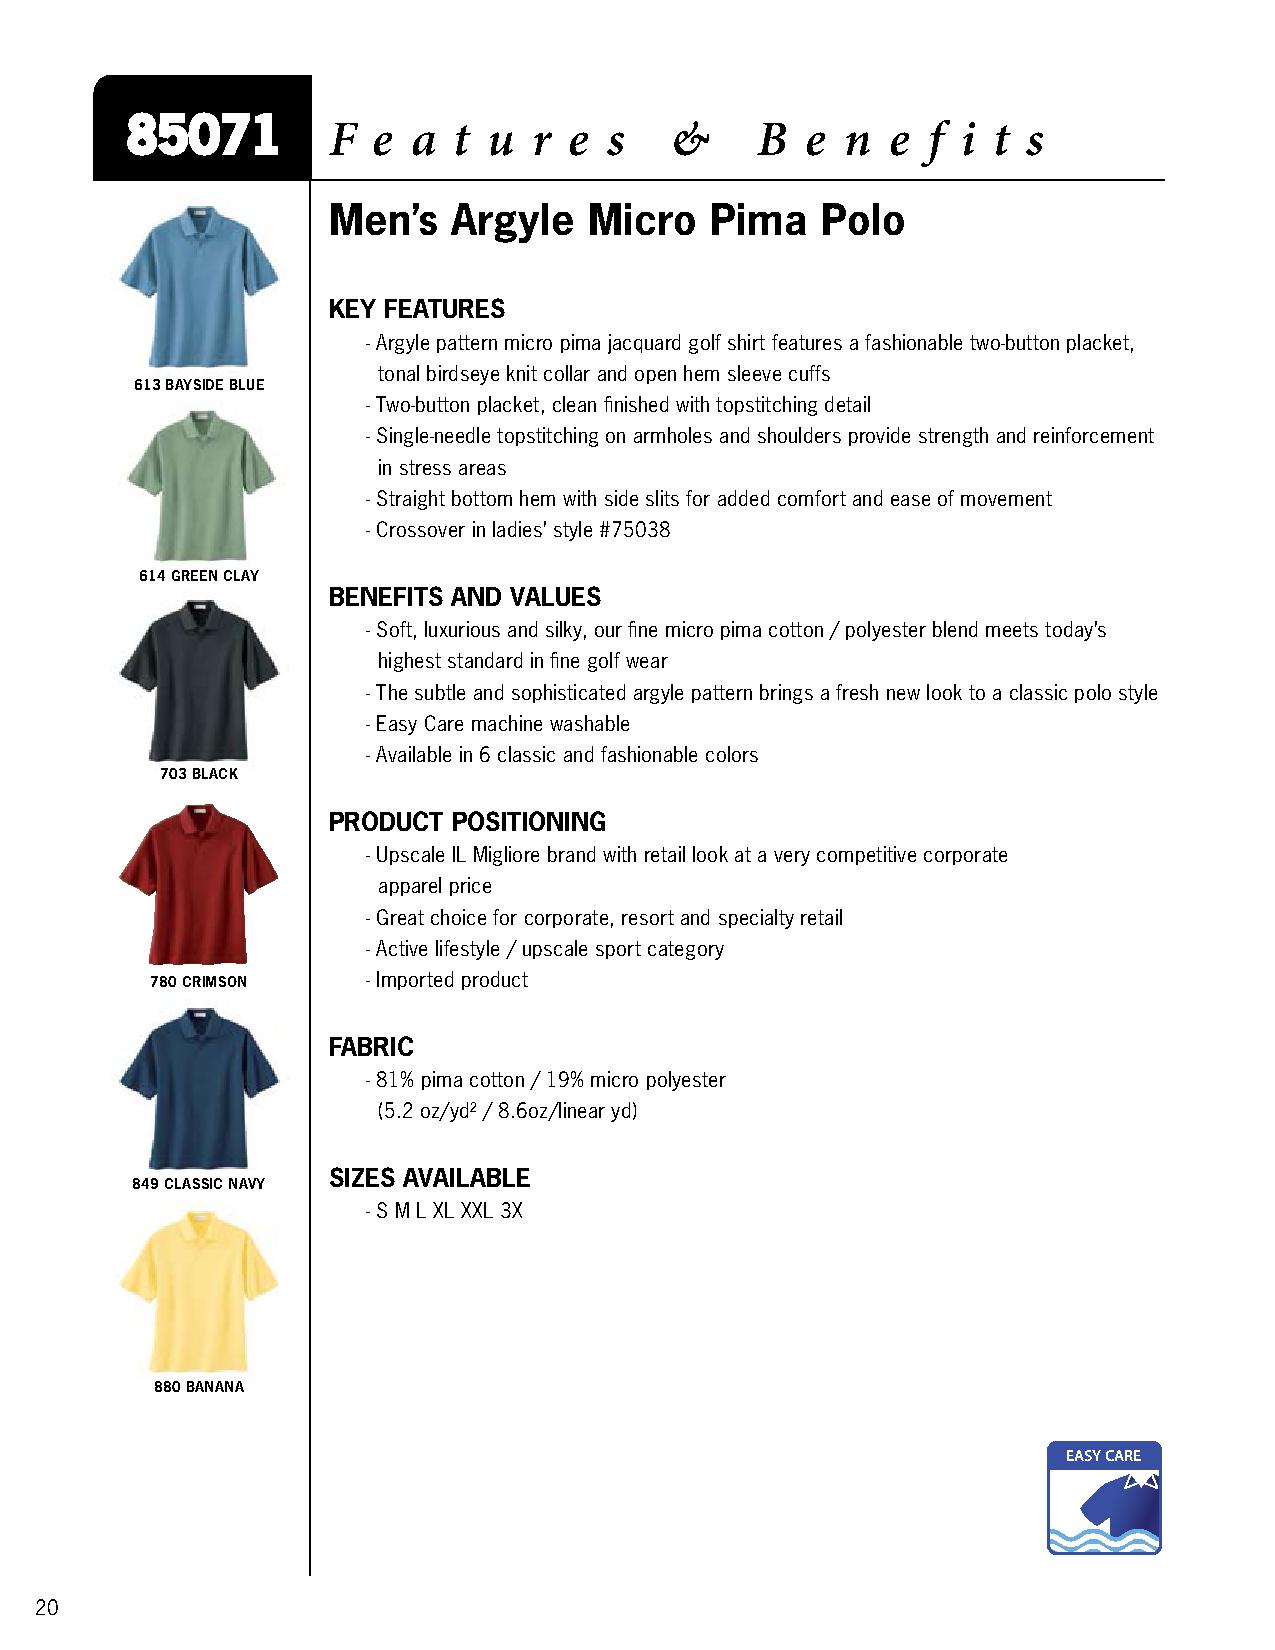 Ash City Micro pima 85071 - Men's Argyle Micro Pima Polo